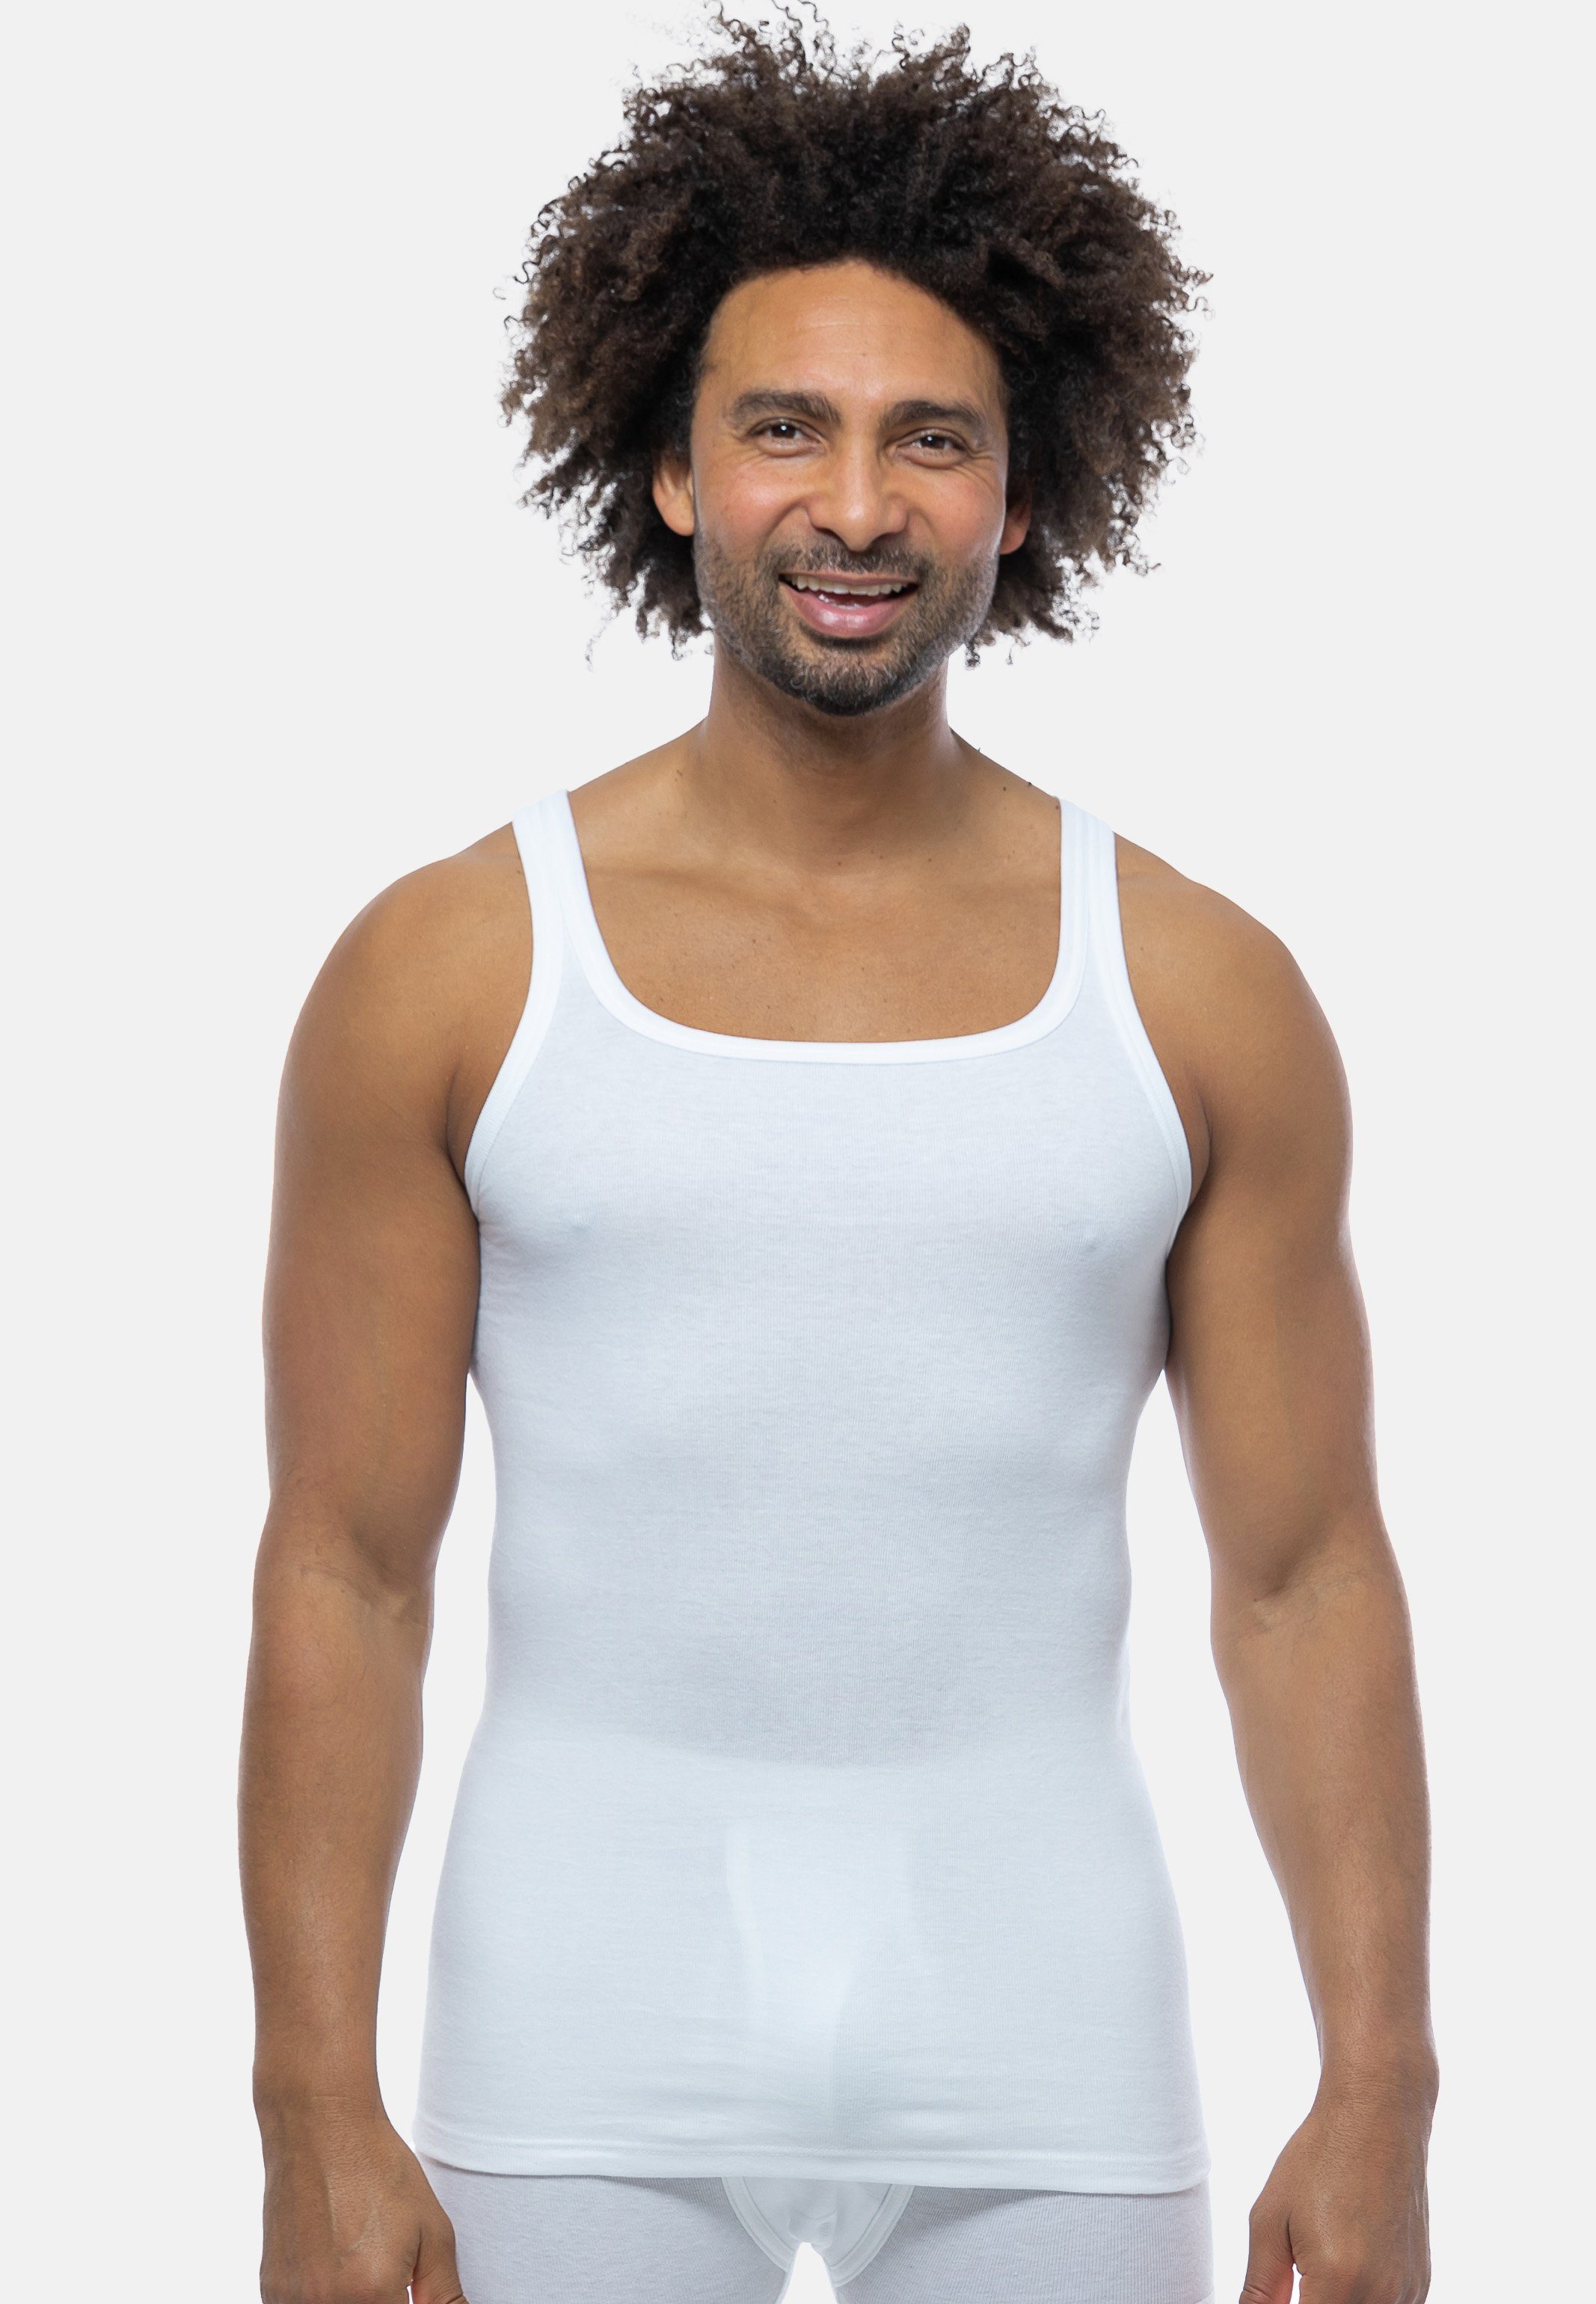 conta Unterhemd 10er Pack 10-St) Formstabil Baumwolle Tanktop - Atmungsaktiv - Unterhemd Feinripp / (Spar-Set, 